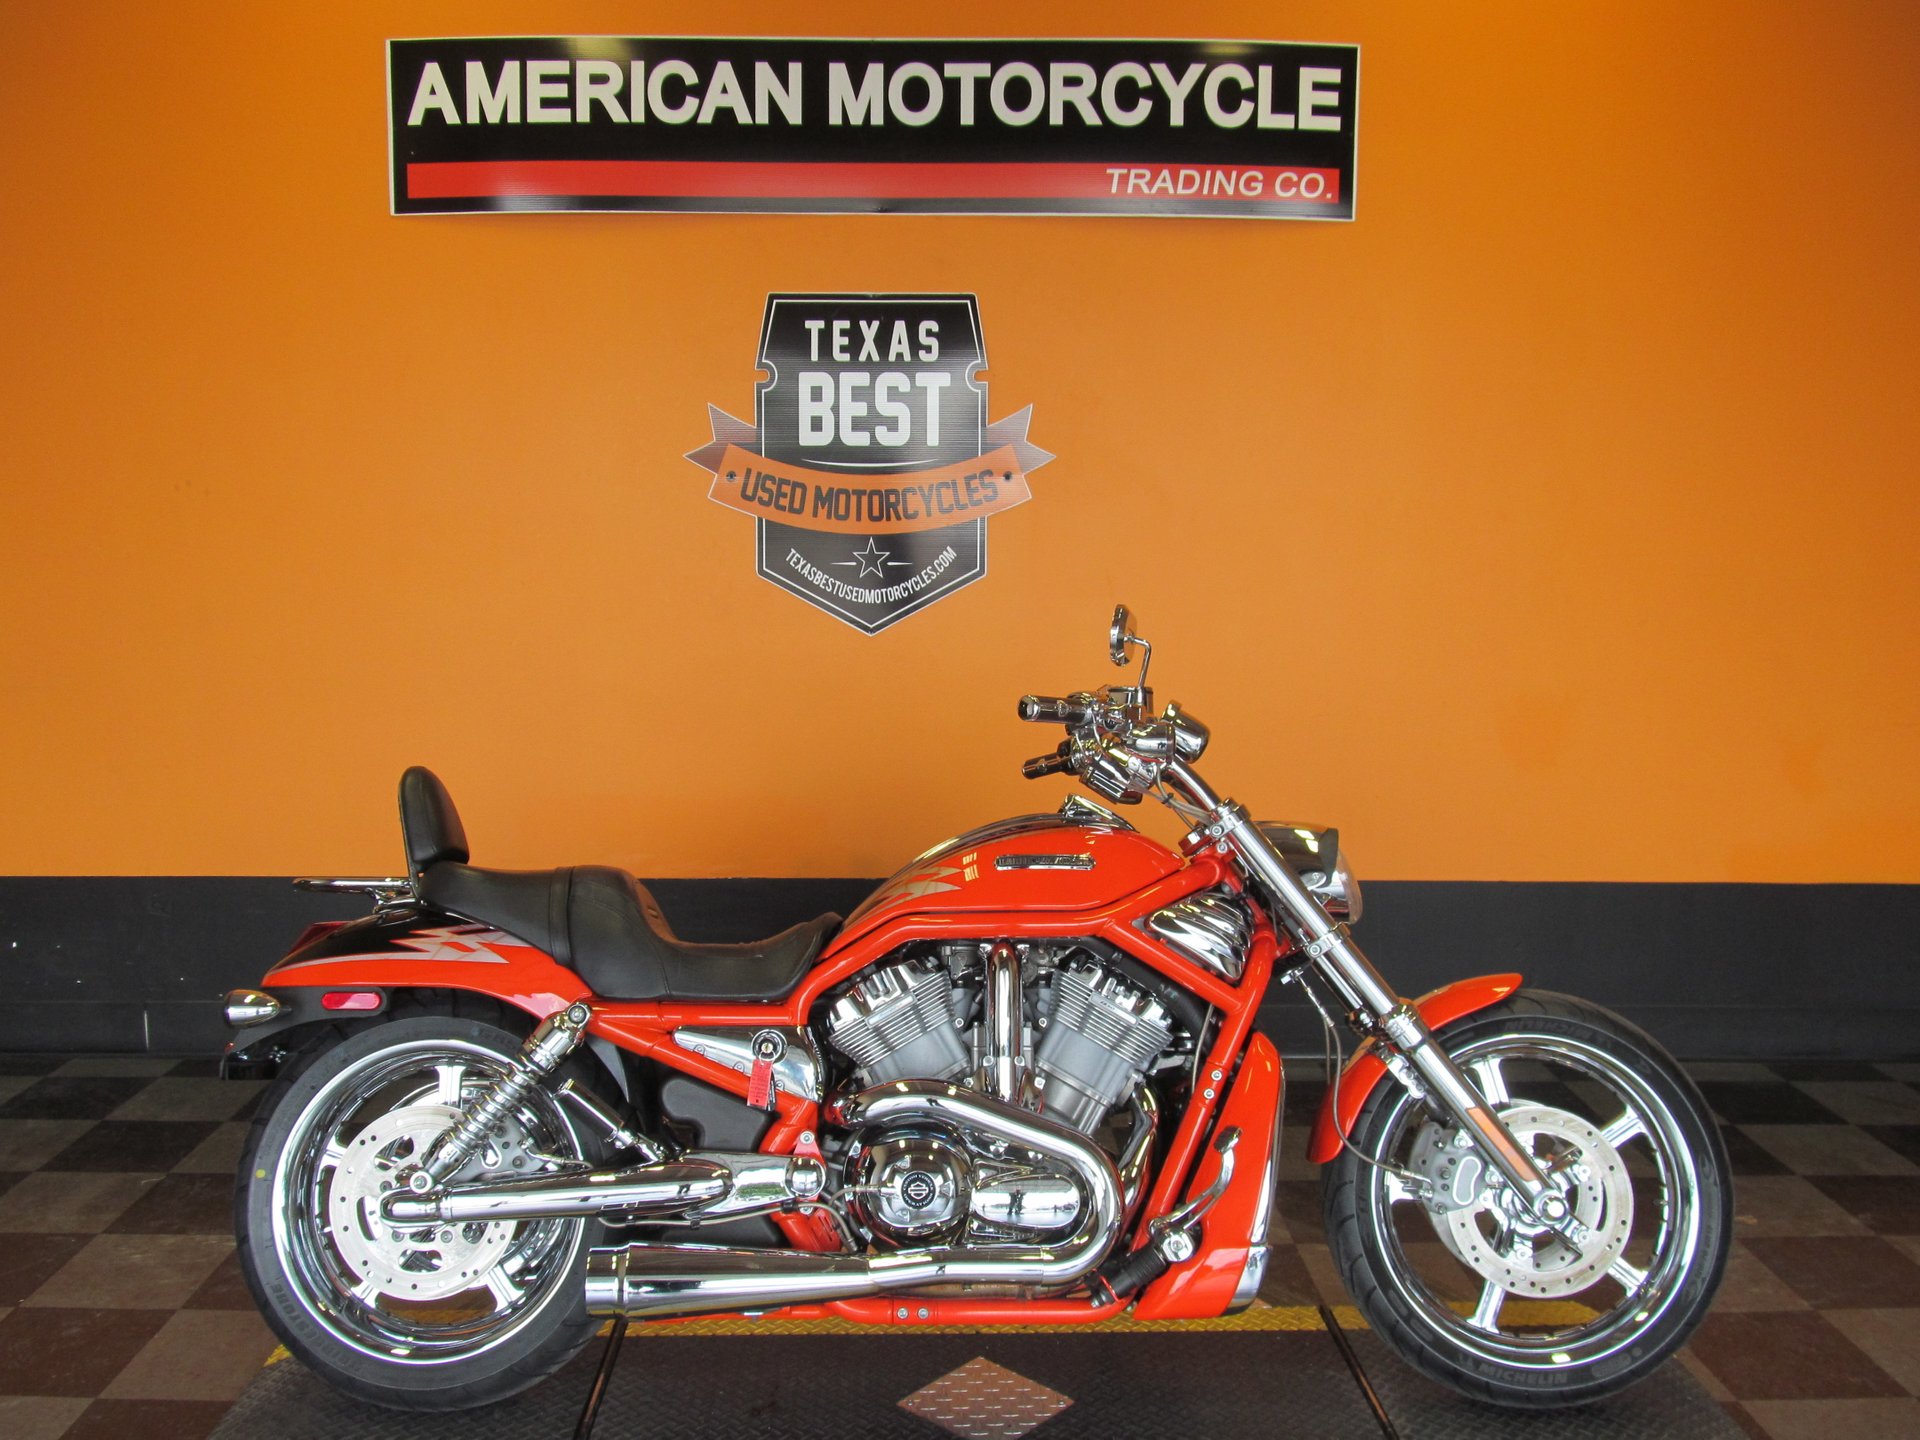 2005 Harley Davidson V Rod American Motorcycle Trading Company Used Harley Davidson Motorcycles